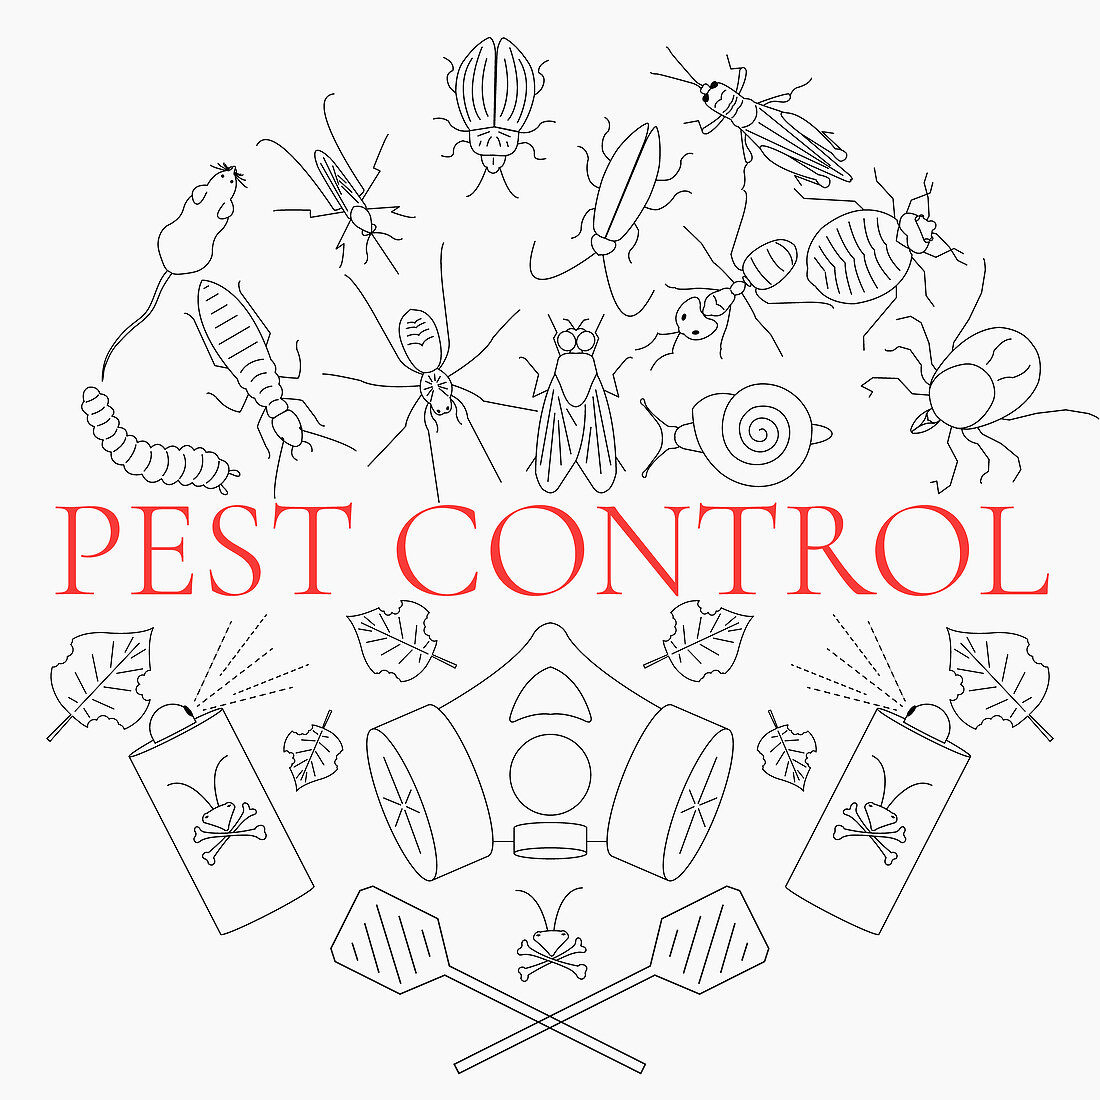 Pest control, conceptual illustration